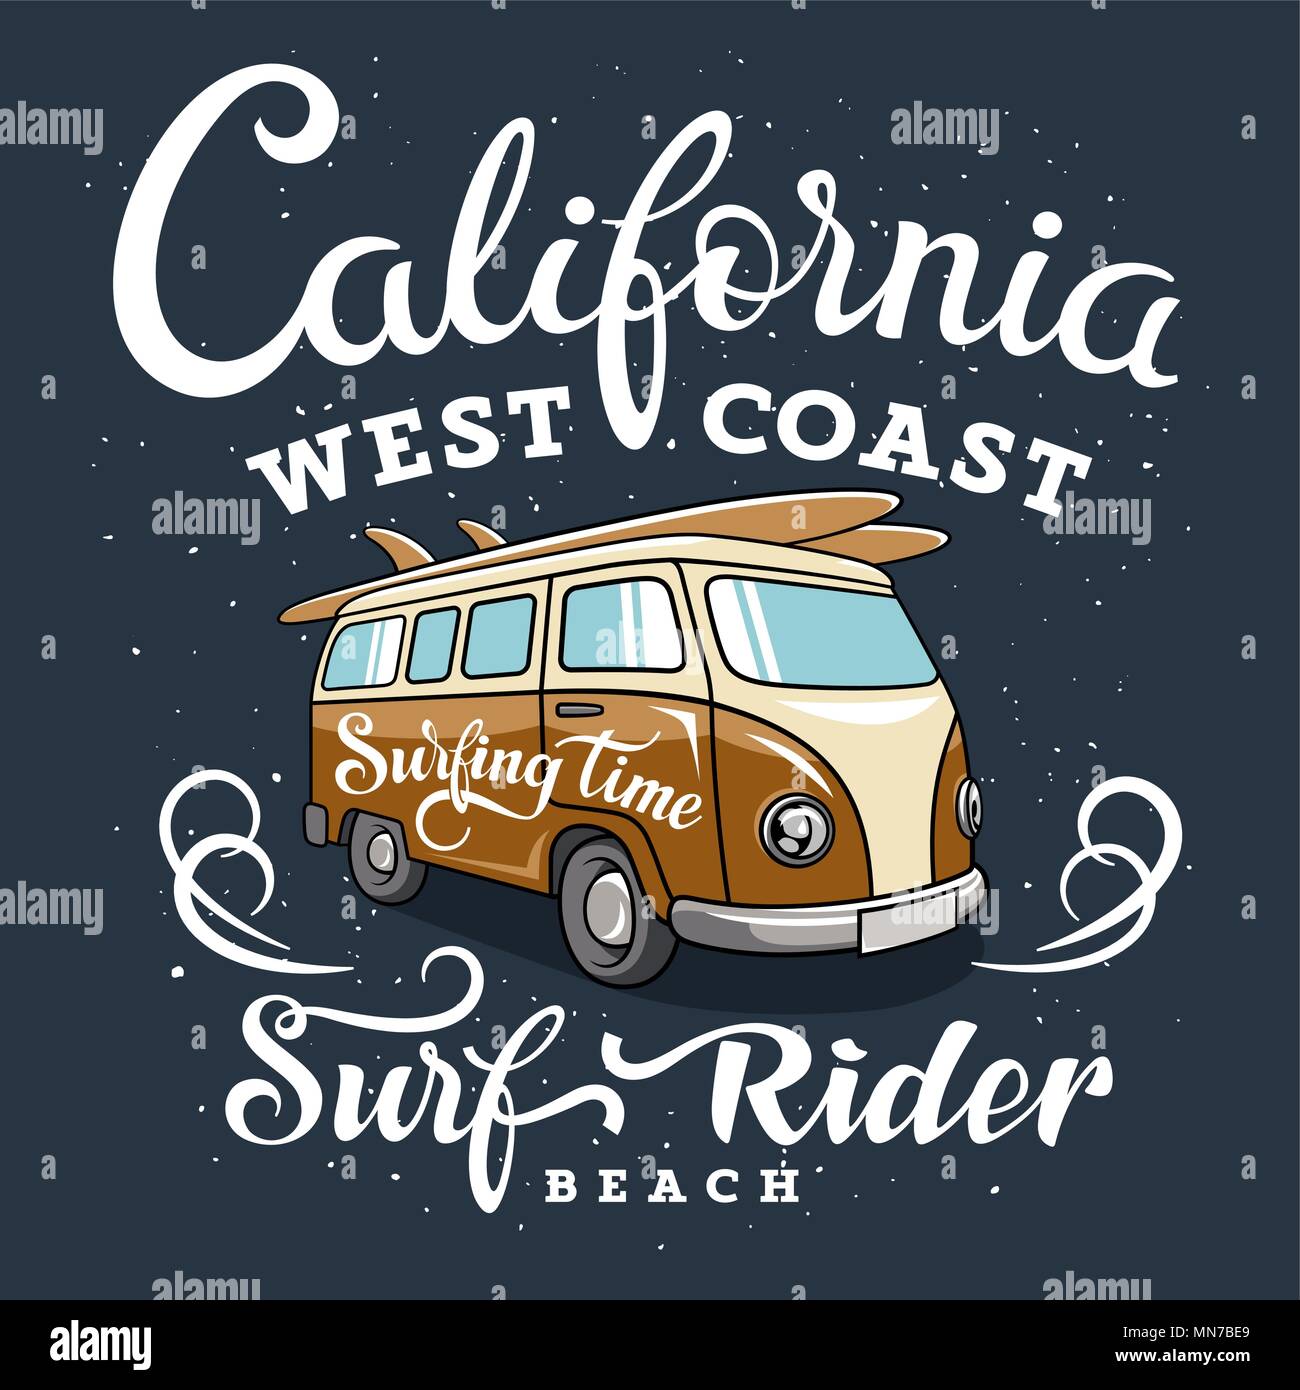 Surfing artwork with a hippie van. California West Coast. Surfrider beach. T-shirt apparel print graphics. Original graphic Tee Stock Vector